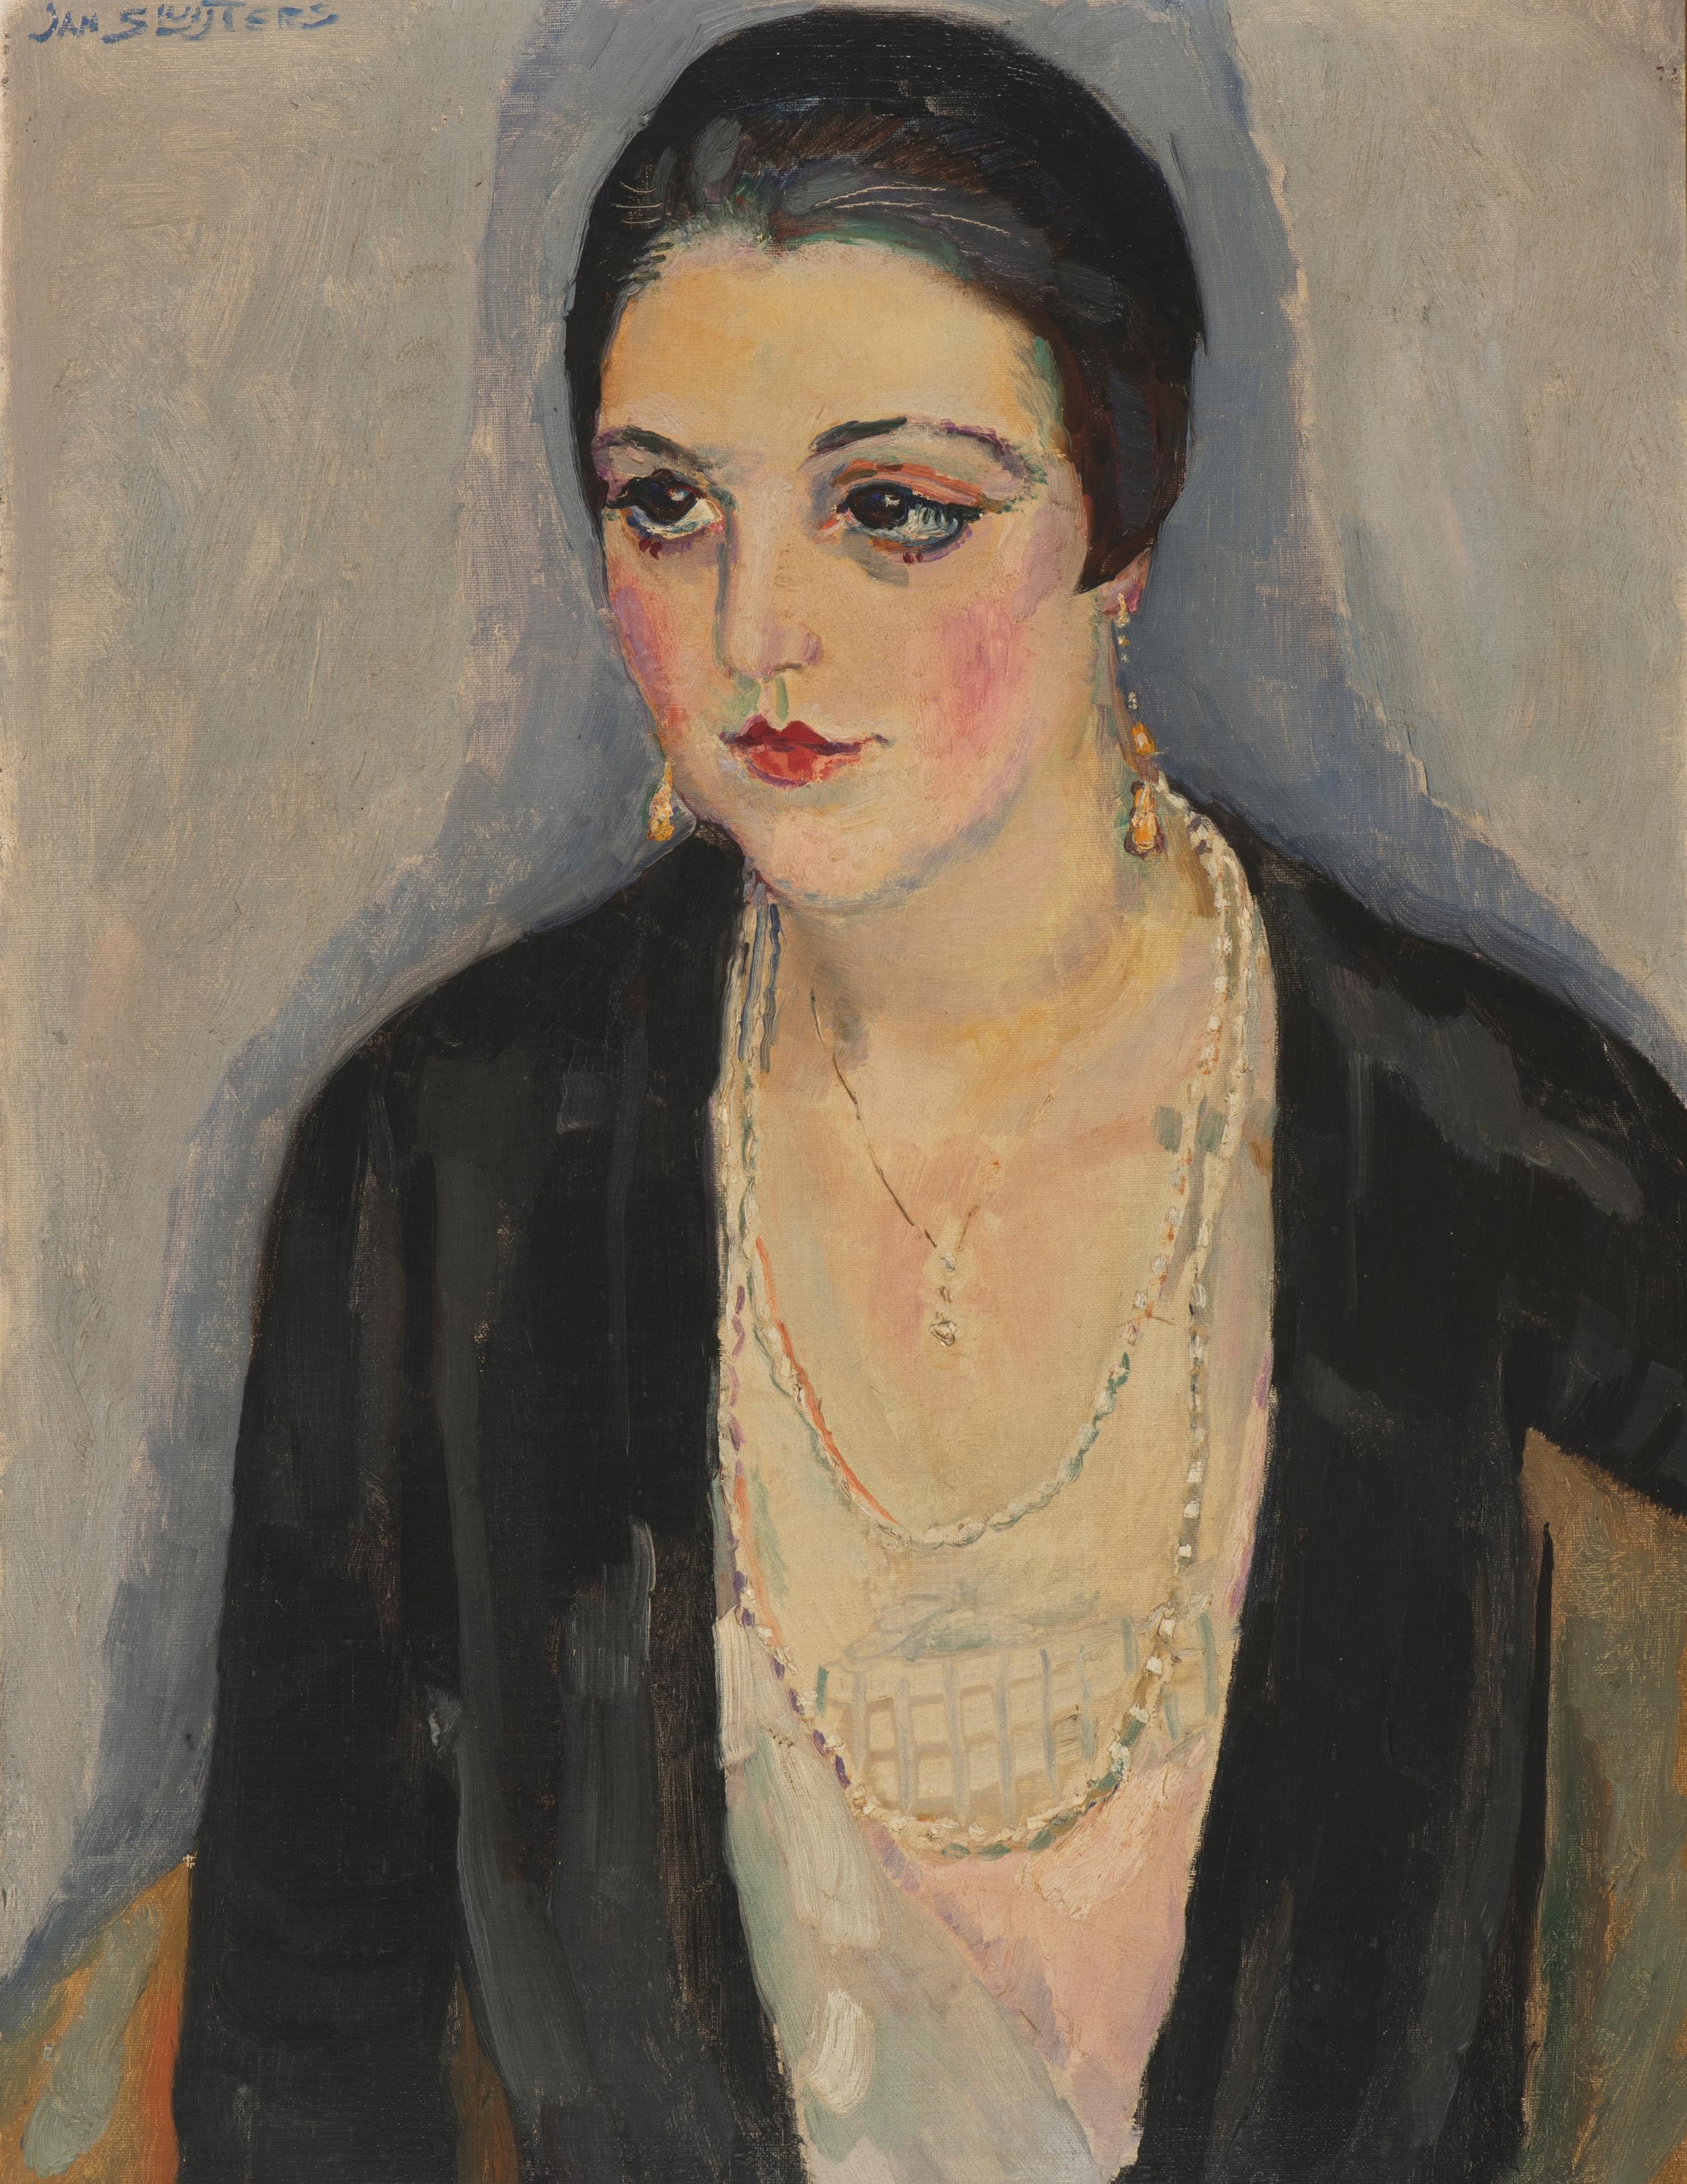 Portrait of a lady by Jan Sluijters, circa 1928